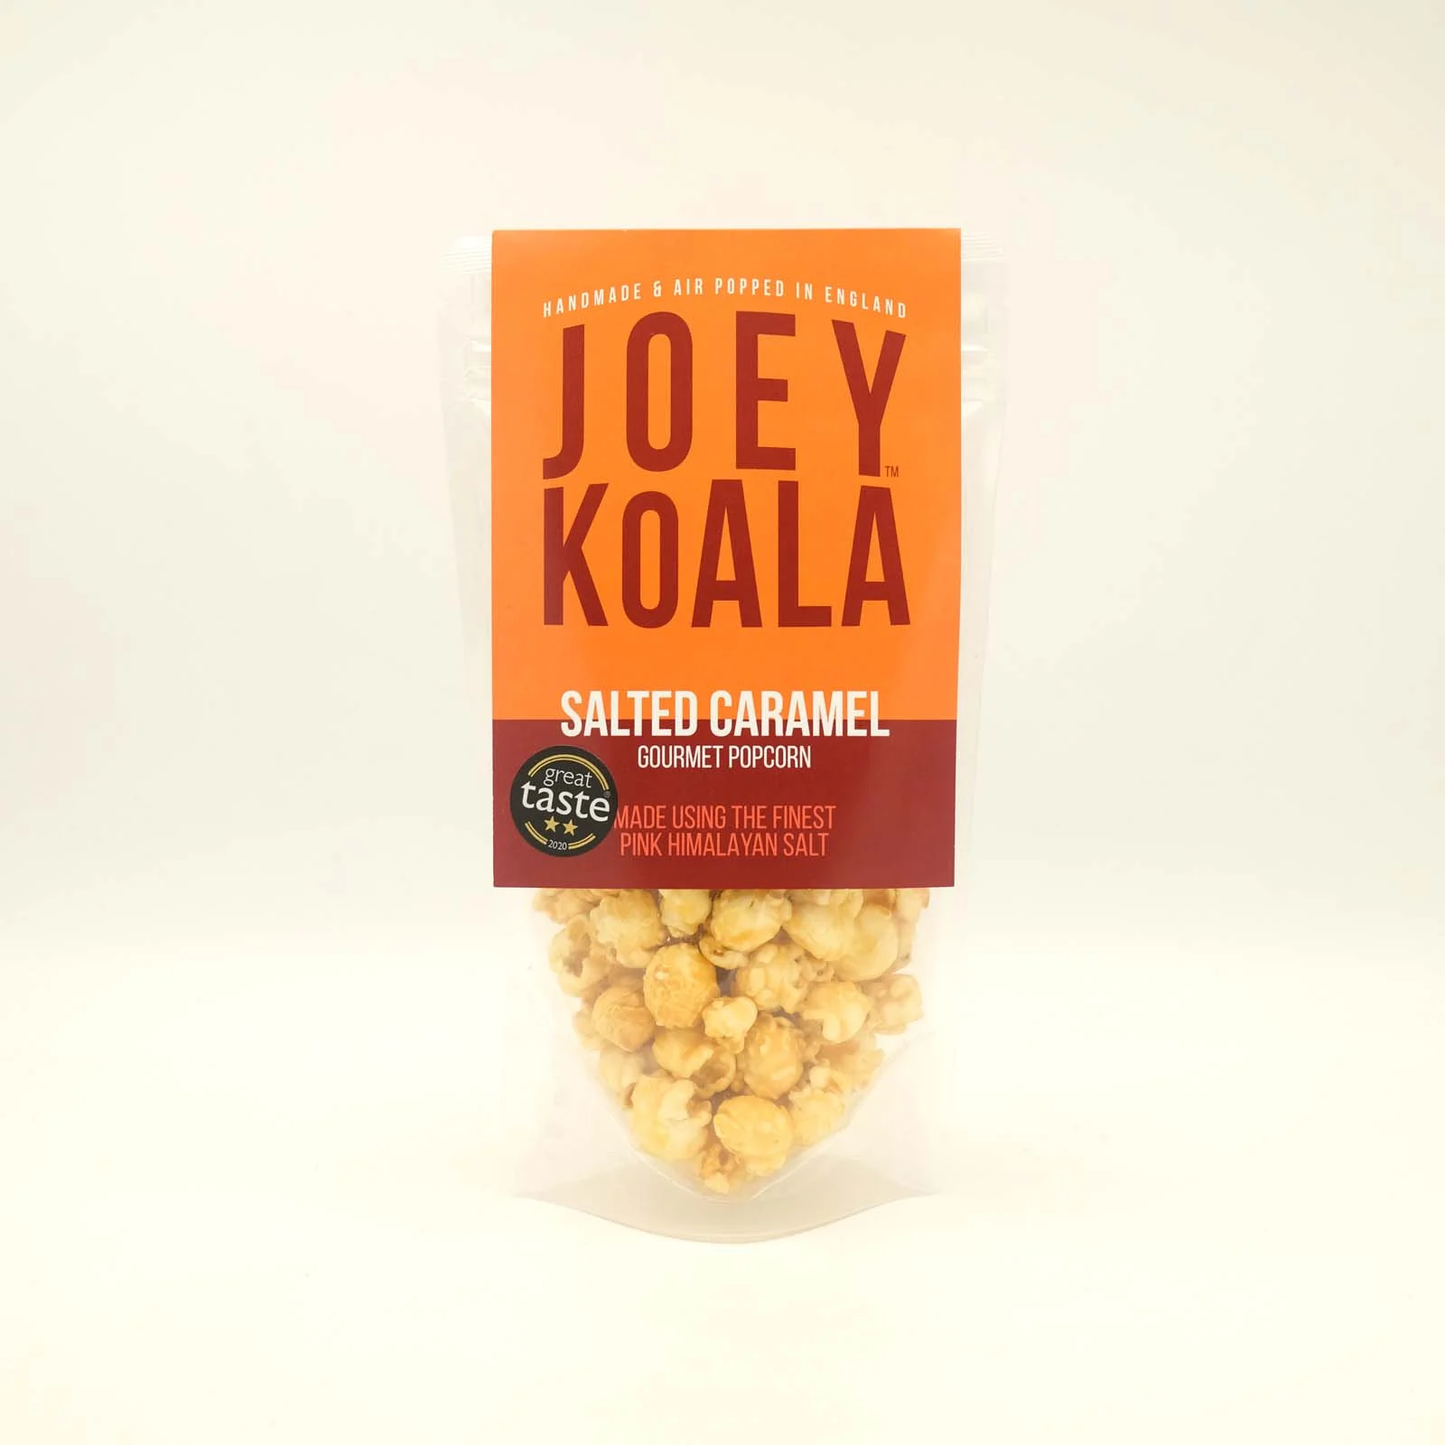 Joey Koala Salted Caramel Popcorn